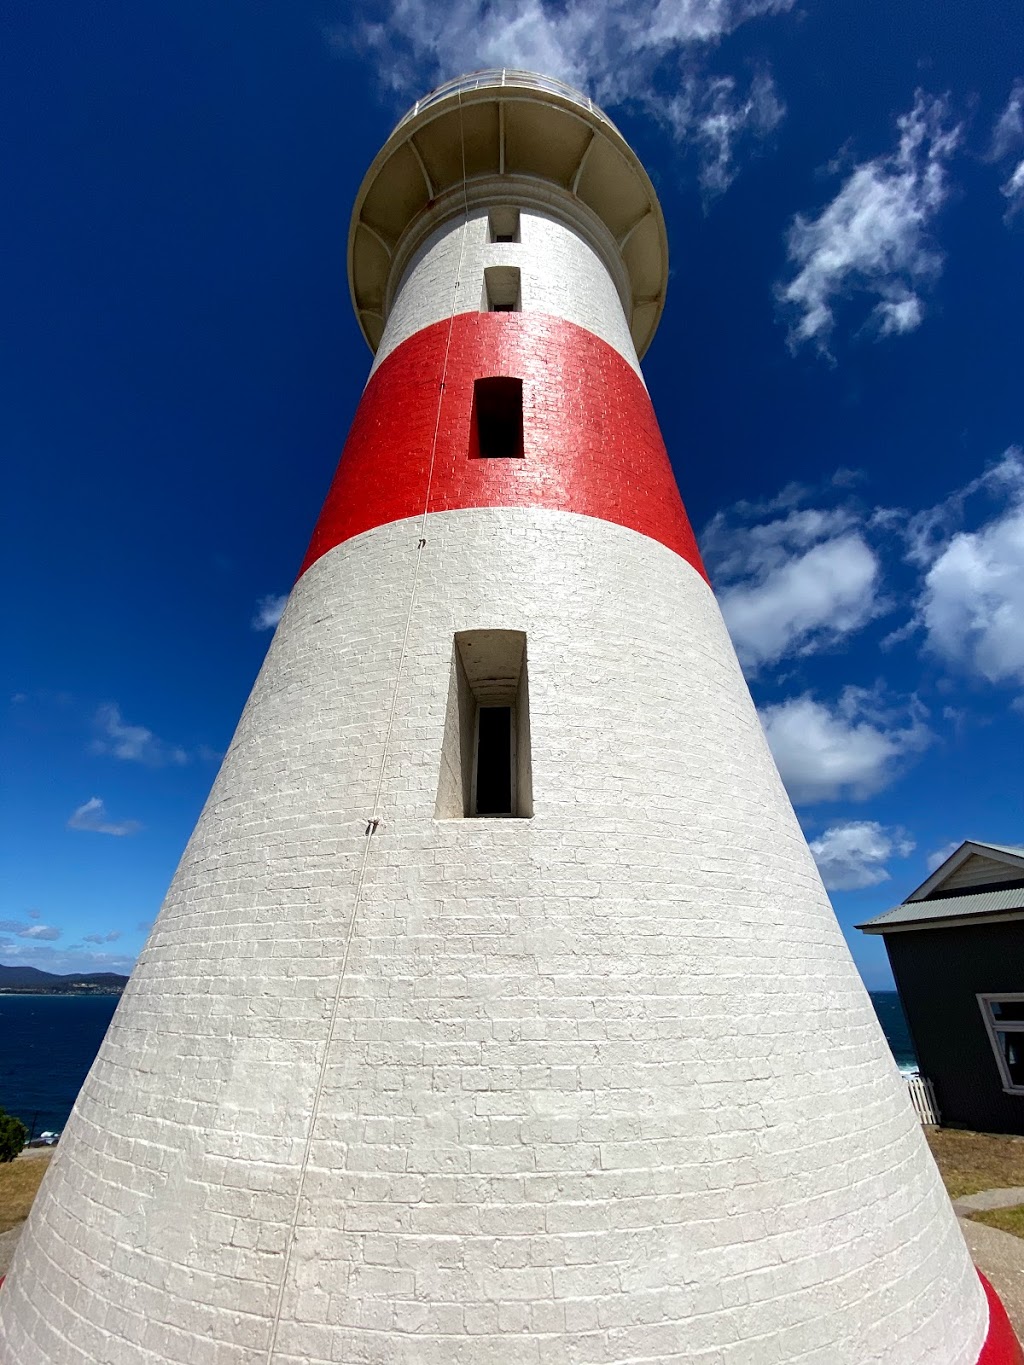 Low Head Historic Site | Tasmania, Australia